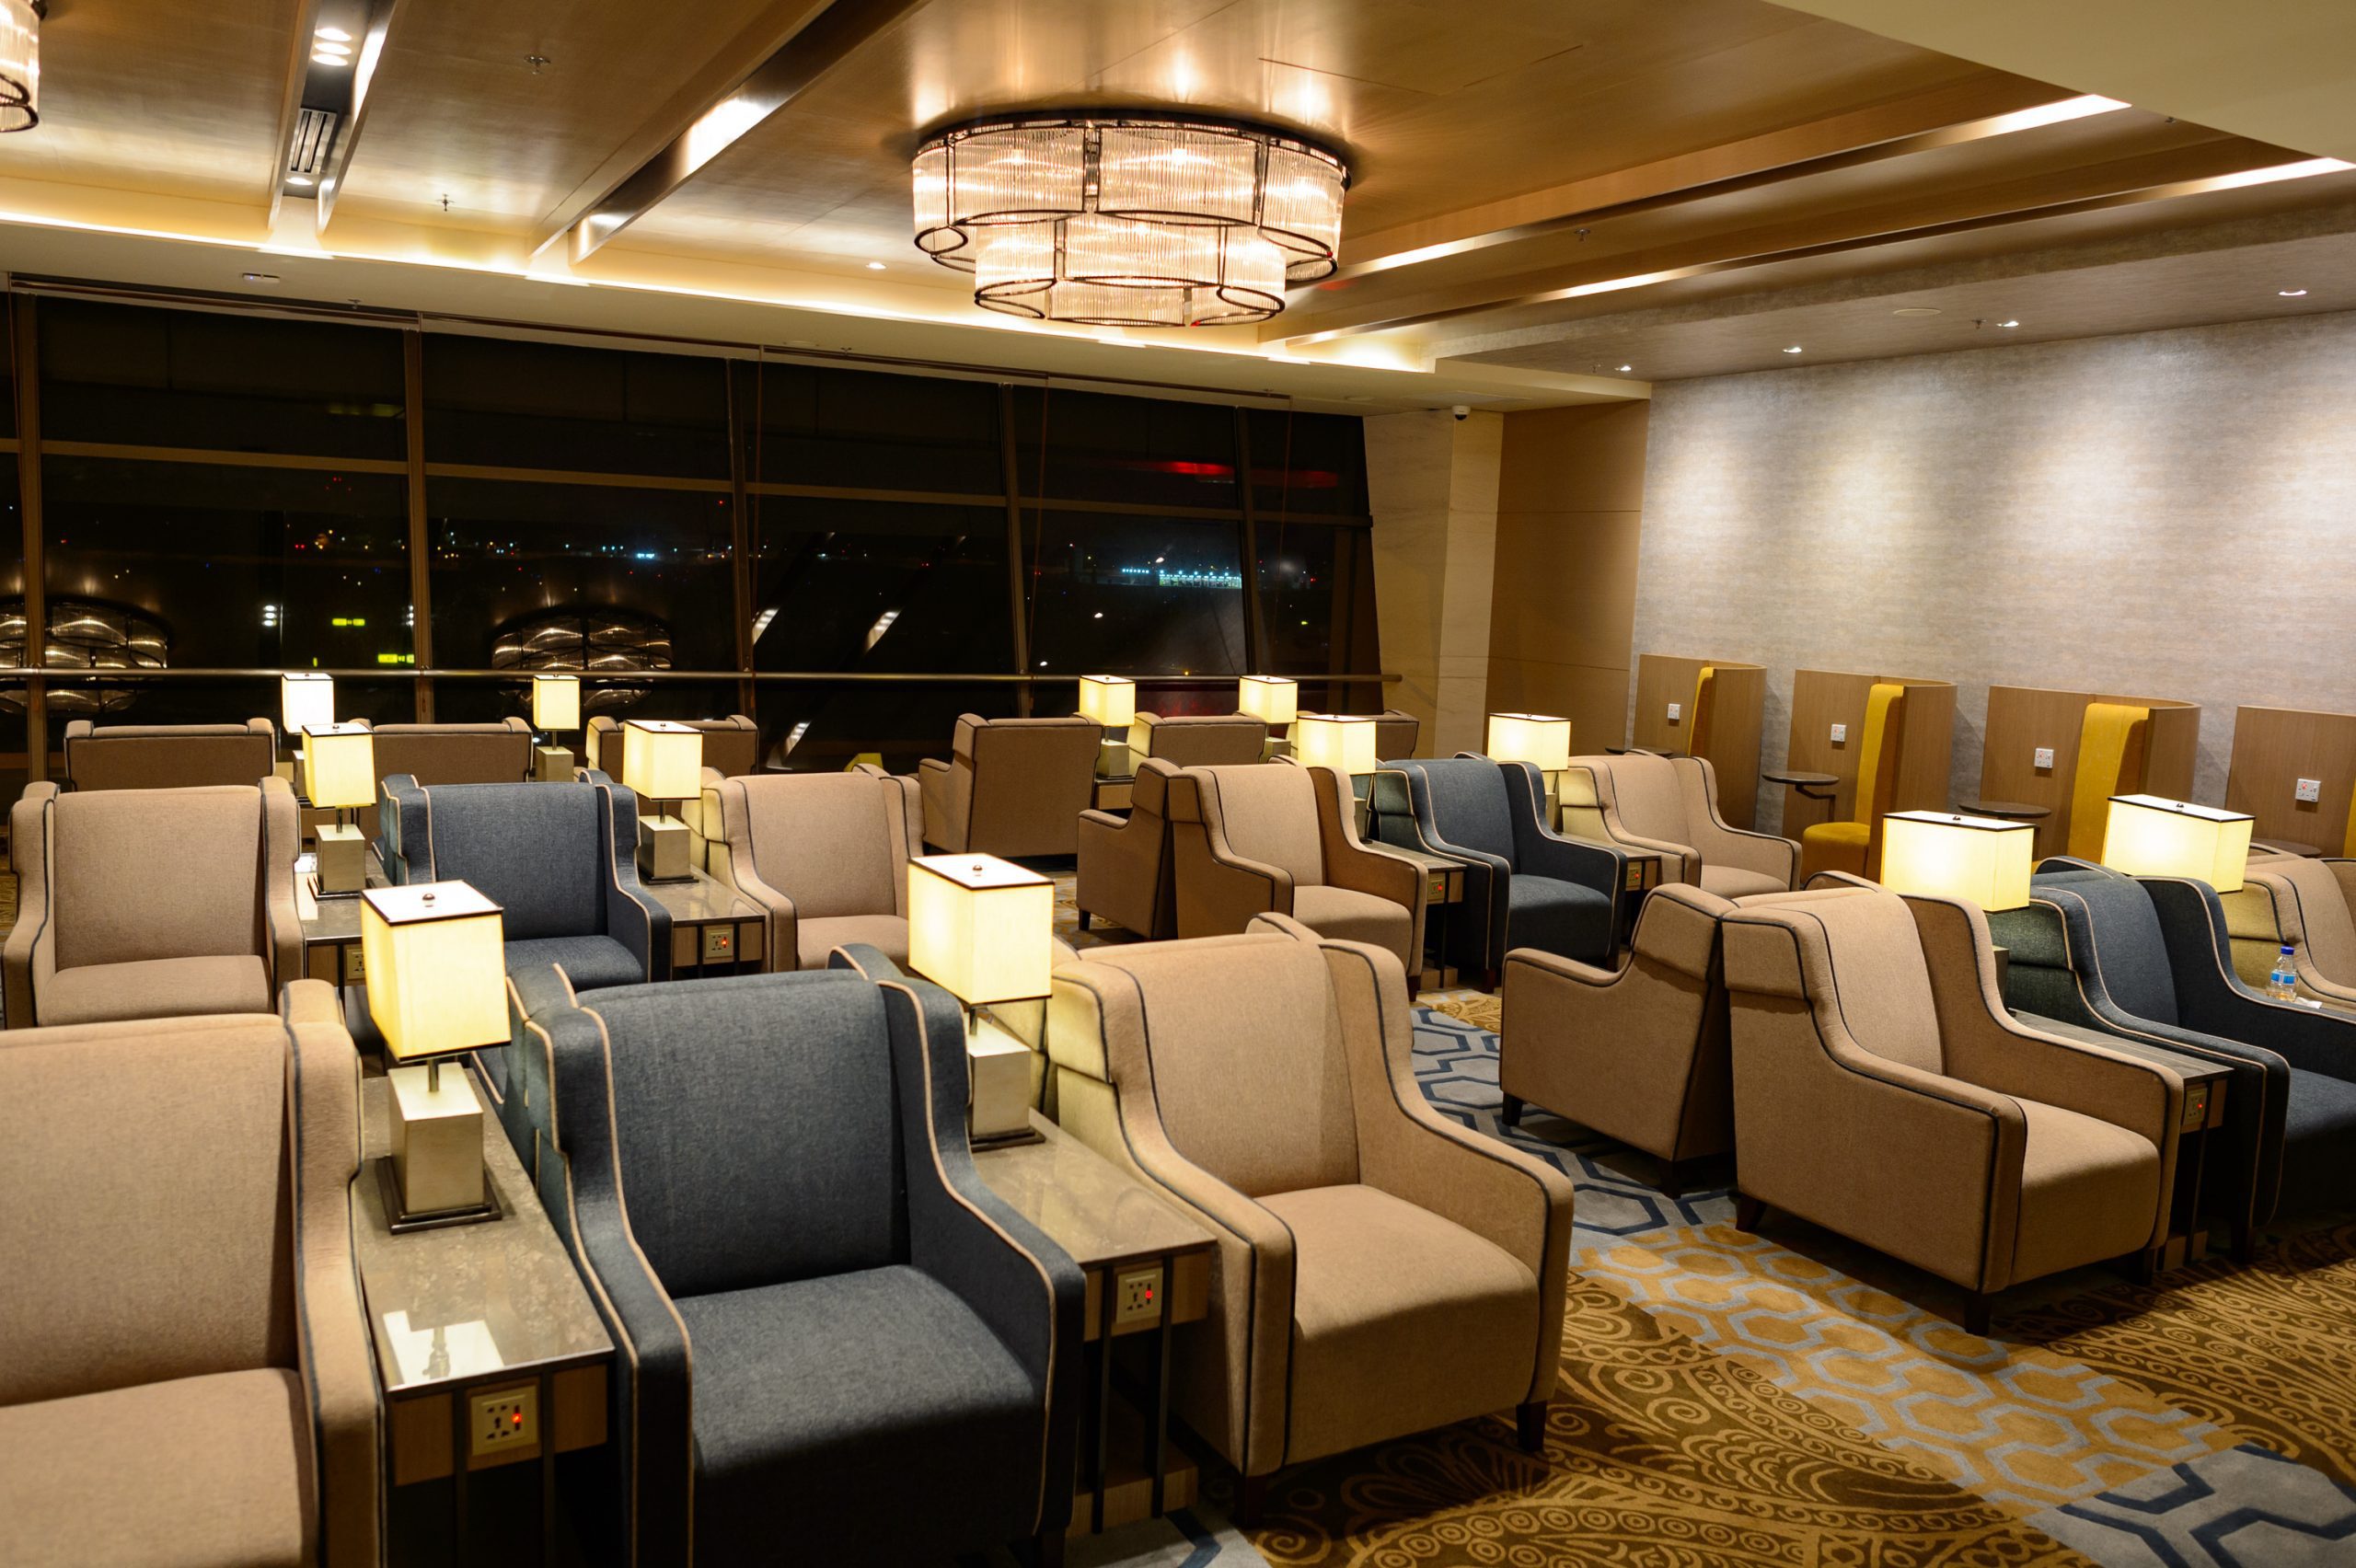 Plaza Premium Lounge, part of Priority pass